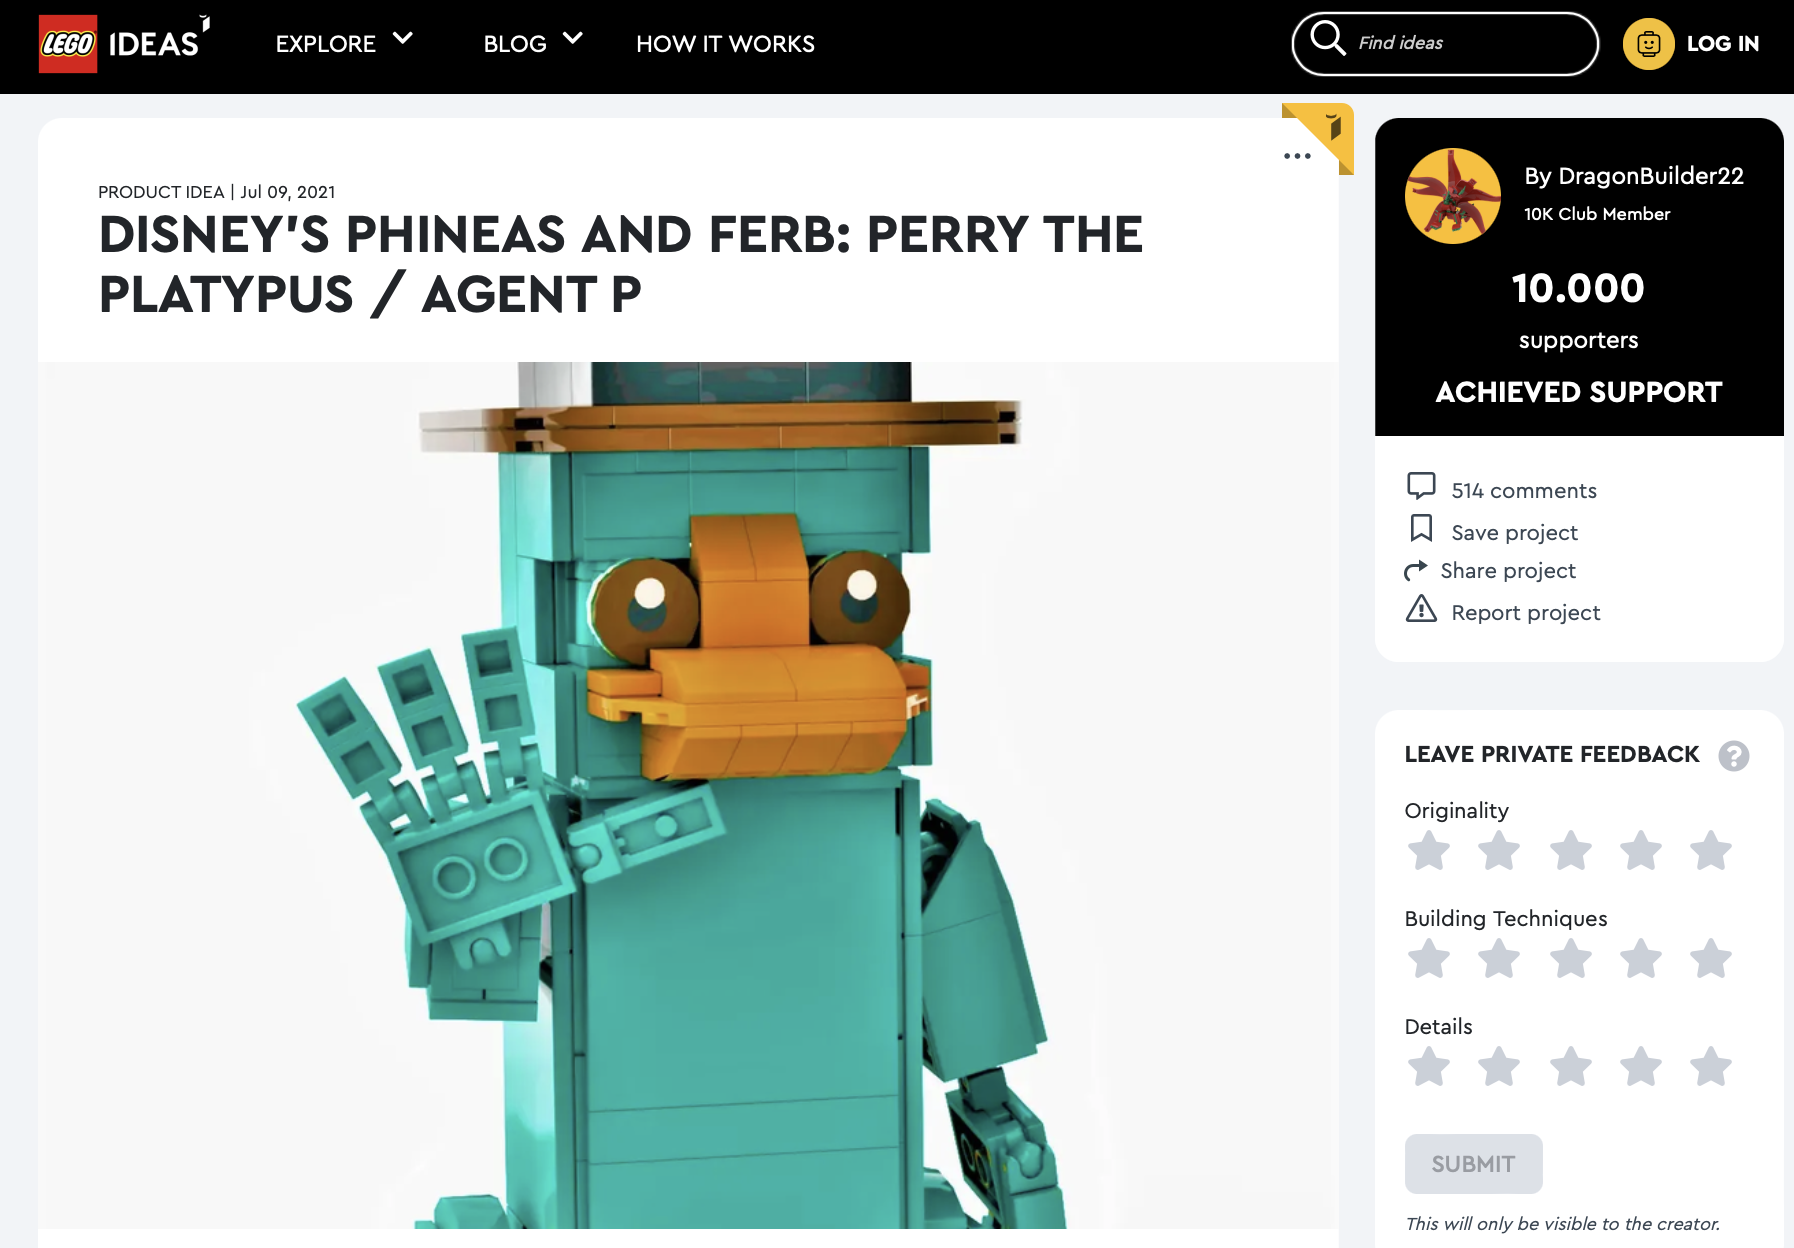 Disney’s Phineas and Ferb: Perry the Platypus/Agent P ha raggiunto i 10.000 like sul portale LEGO Ideas